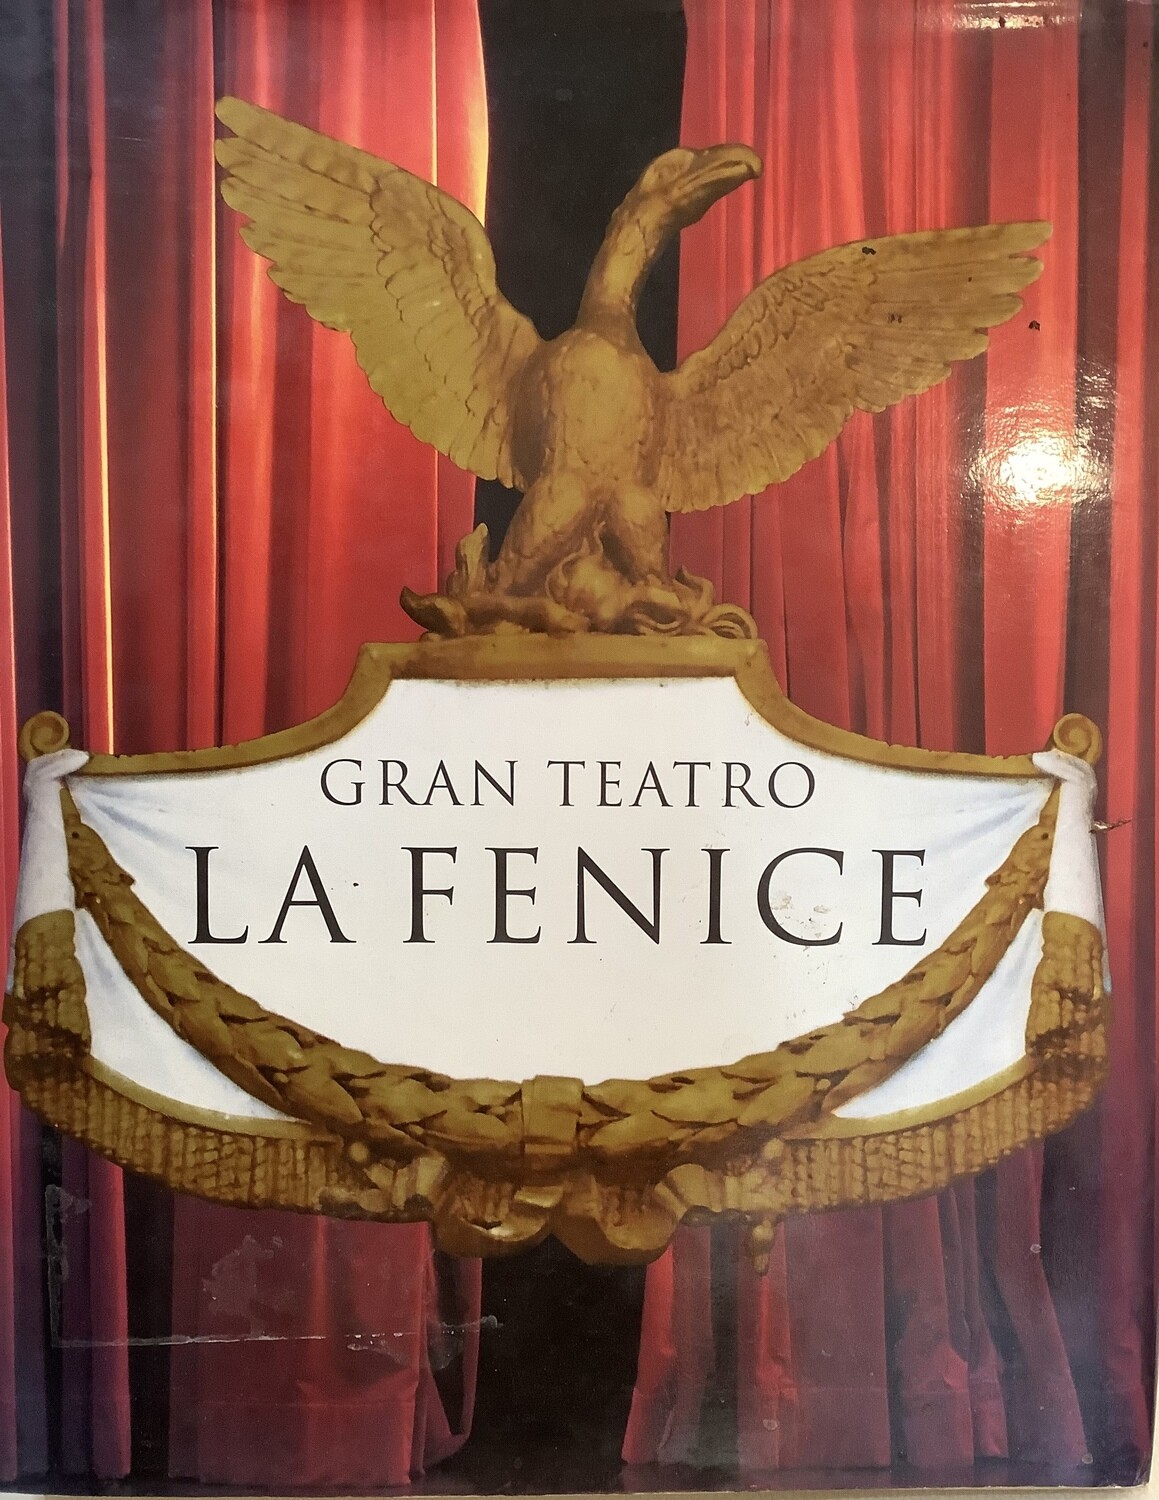 Gran Teatro La Fenice Hardcover Giuseppe Pugliese 13.1” length 